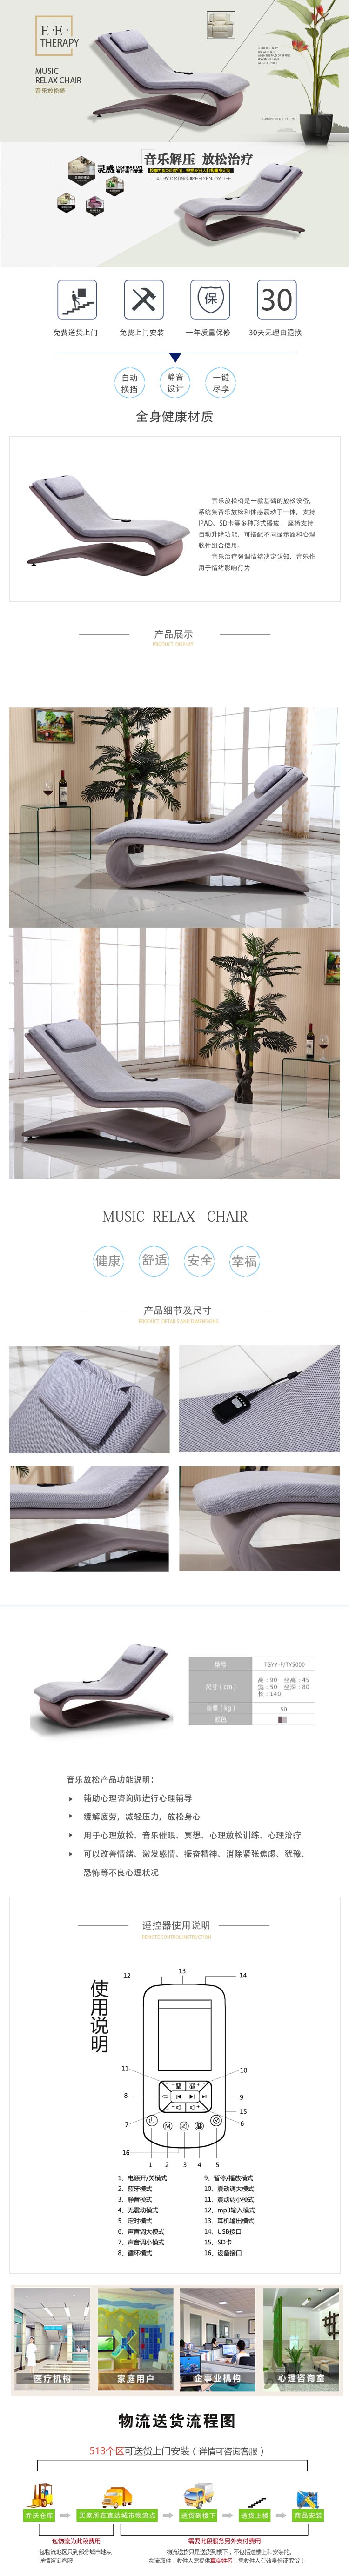 Music relaxing chair